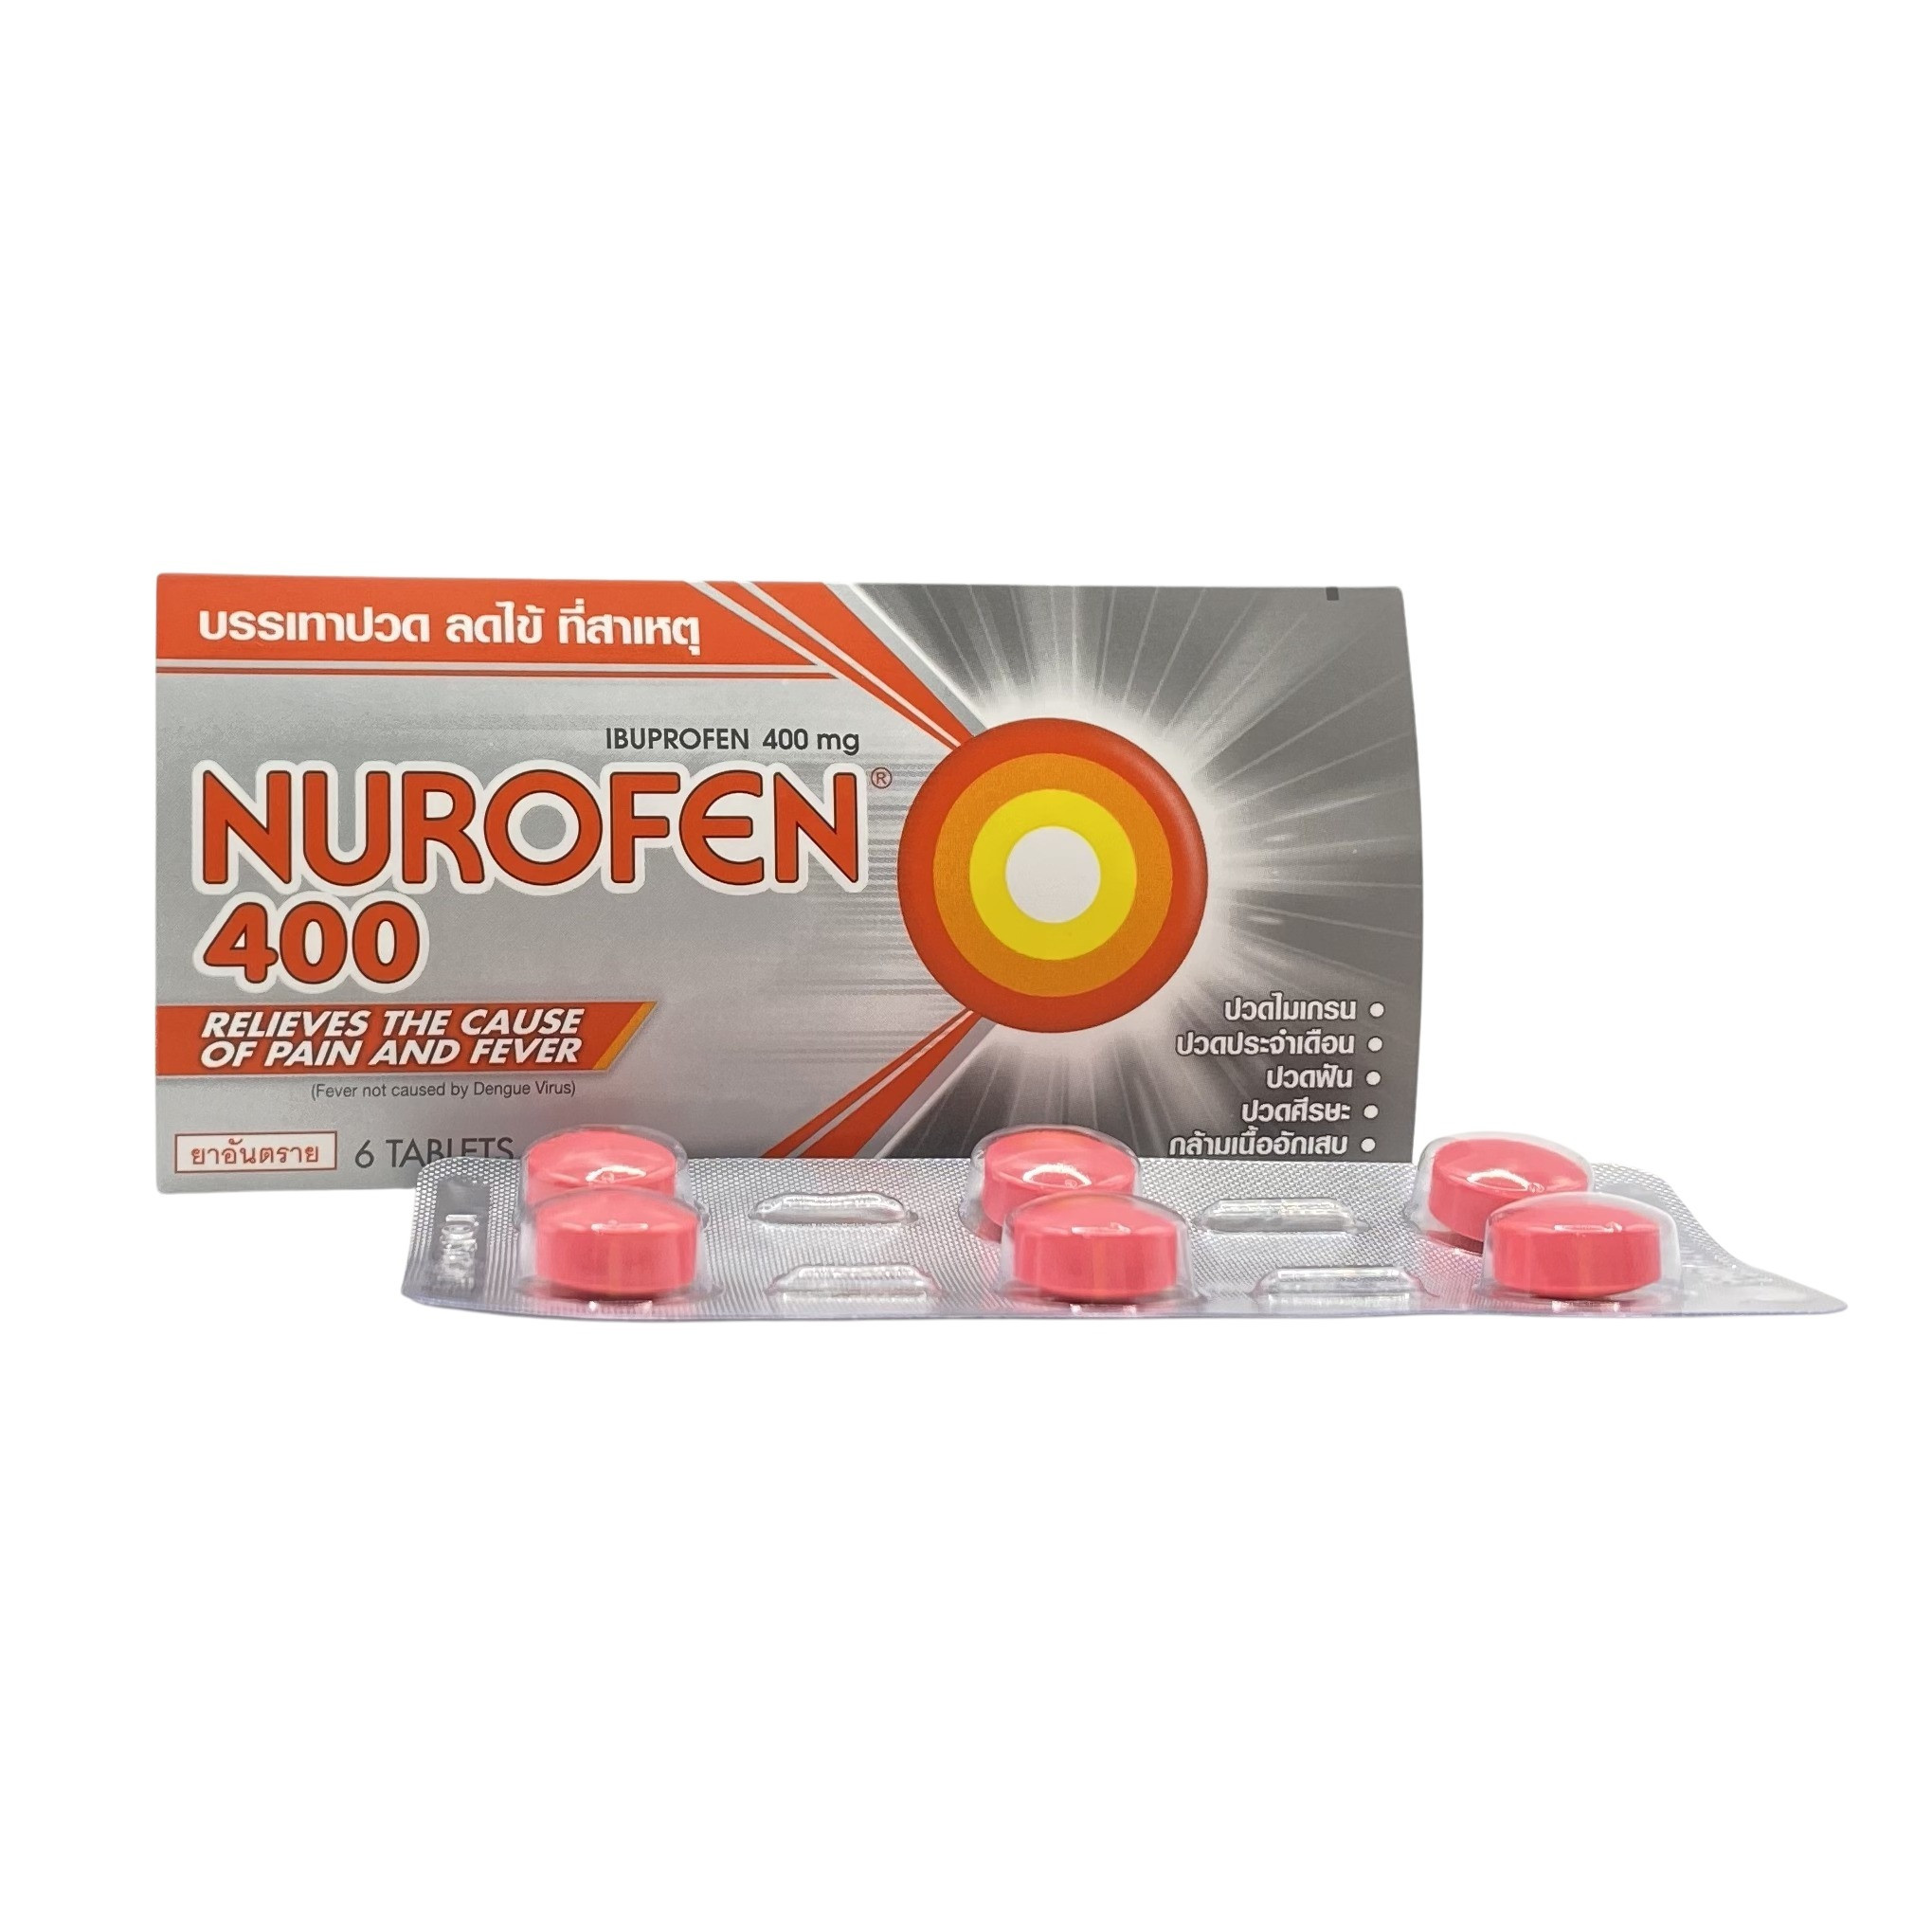 Nurofen 400 (Ibuprofen 400 Mg) ยาแก้ปวด ลดไข้ ต้านการอักเสบ นูโรเฟน 400  ขนาดบรรจุ 6 เม็ด/แผง - สั่งยาออนไลน์